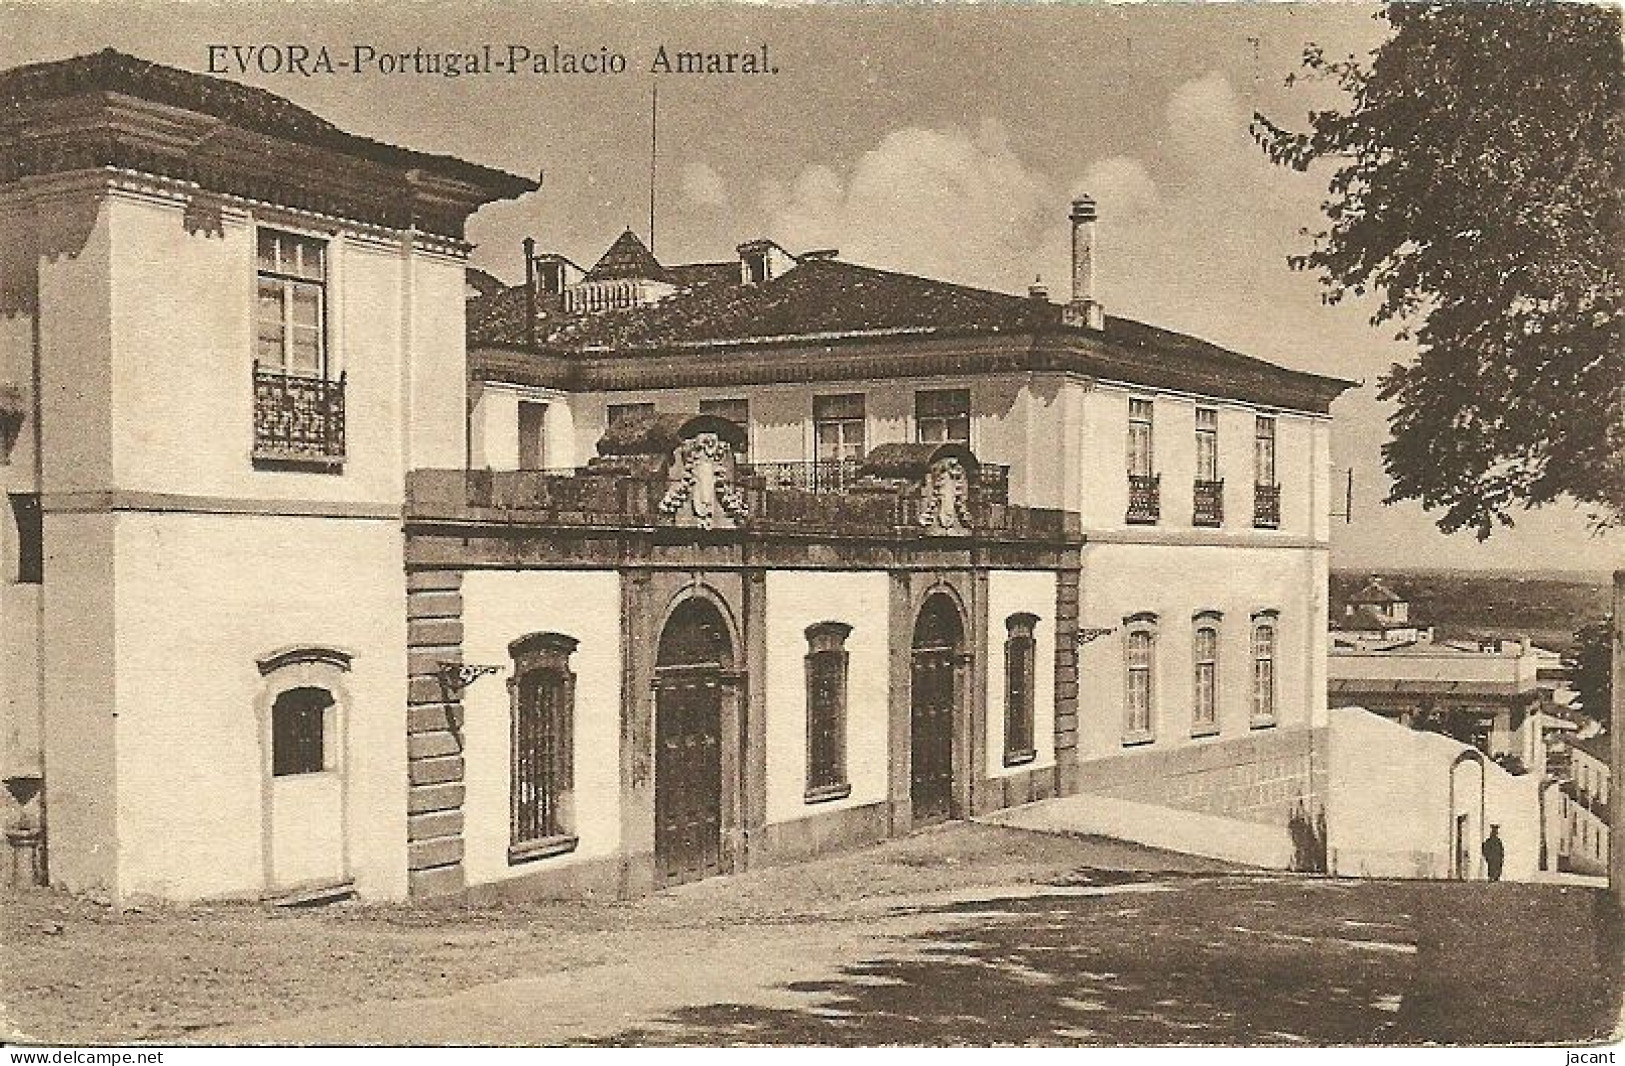 Portugal - Evora - Palacio Amaral - Evora